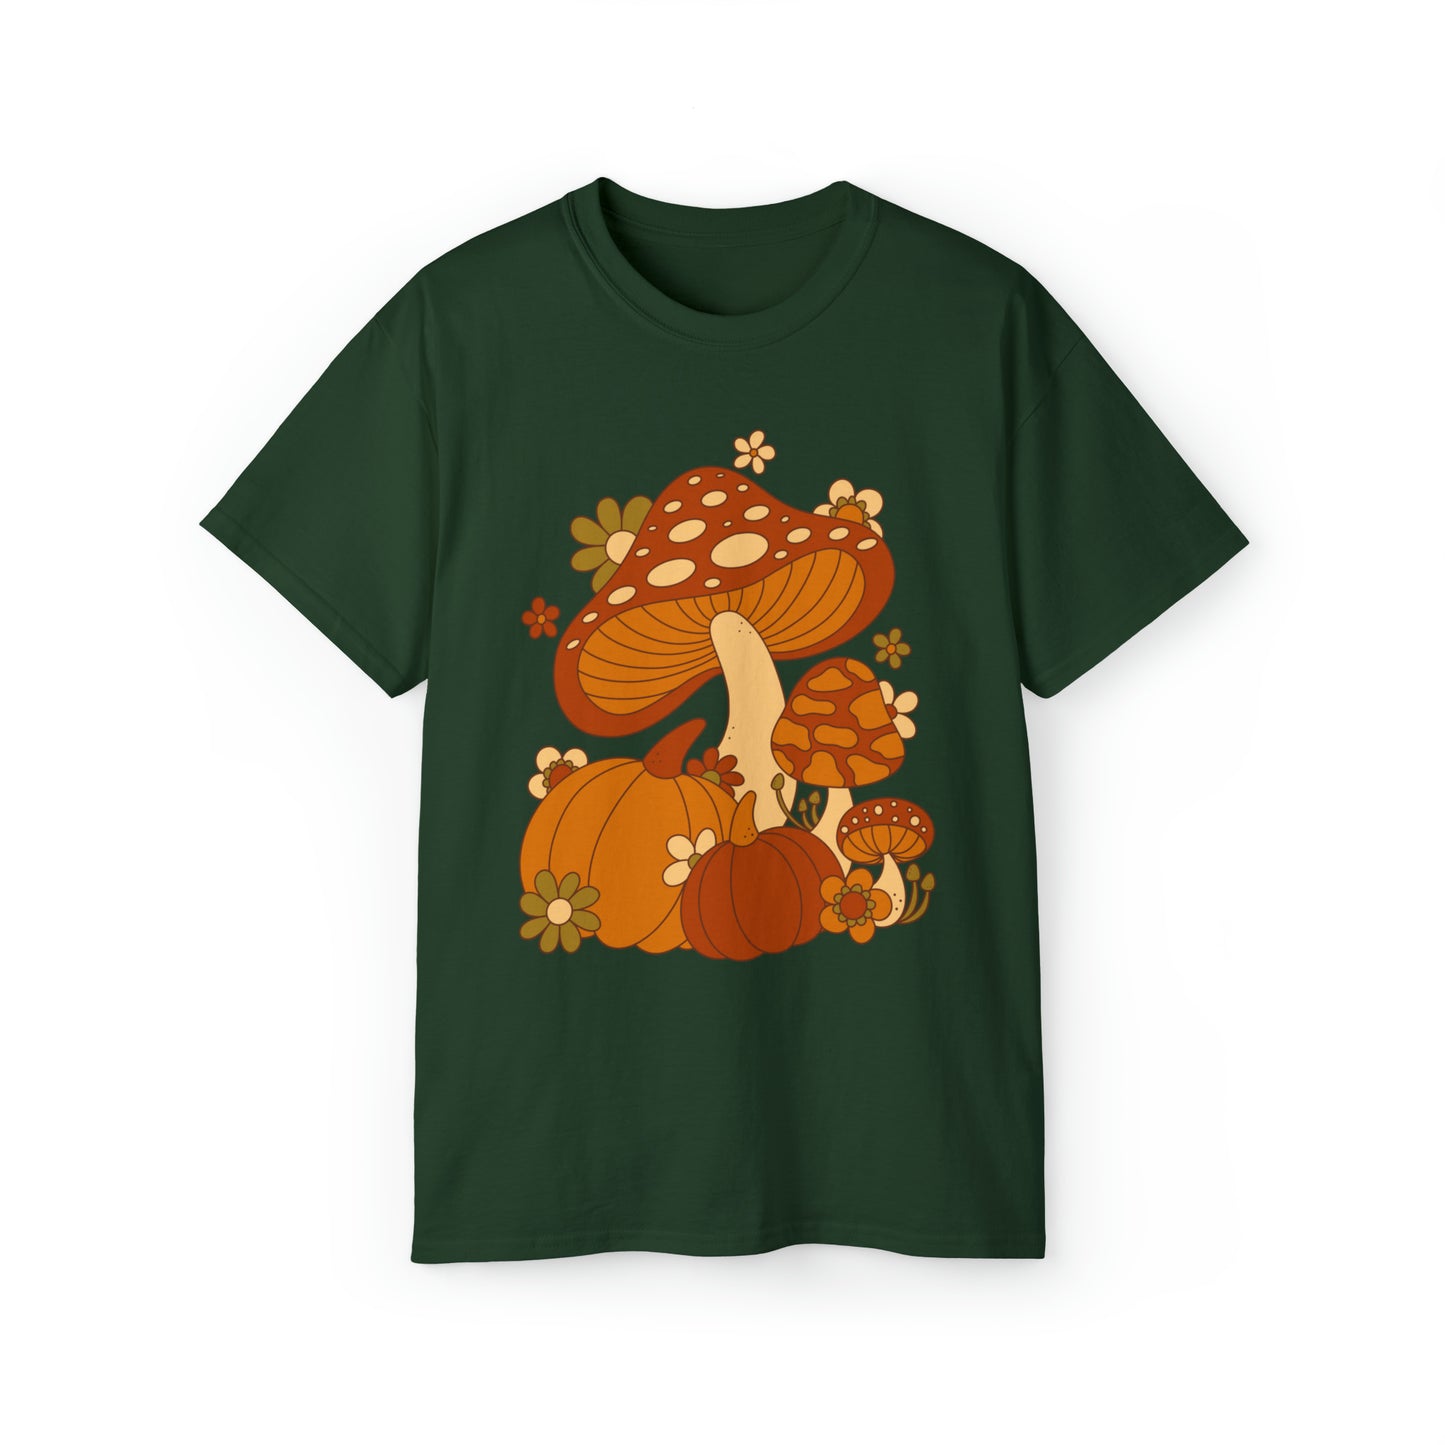 Mighty Mushroom Vol. 2 T-shirt